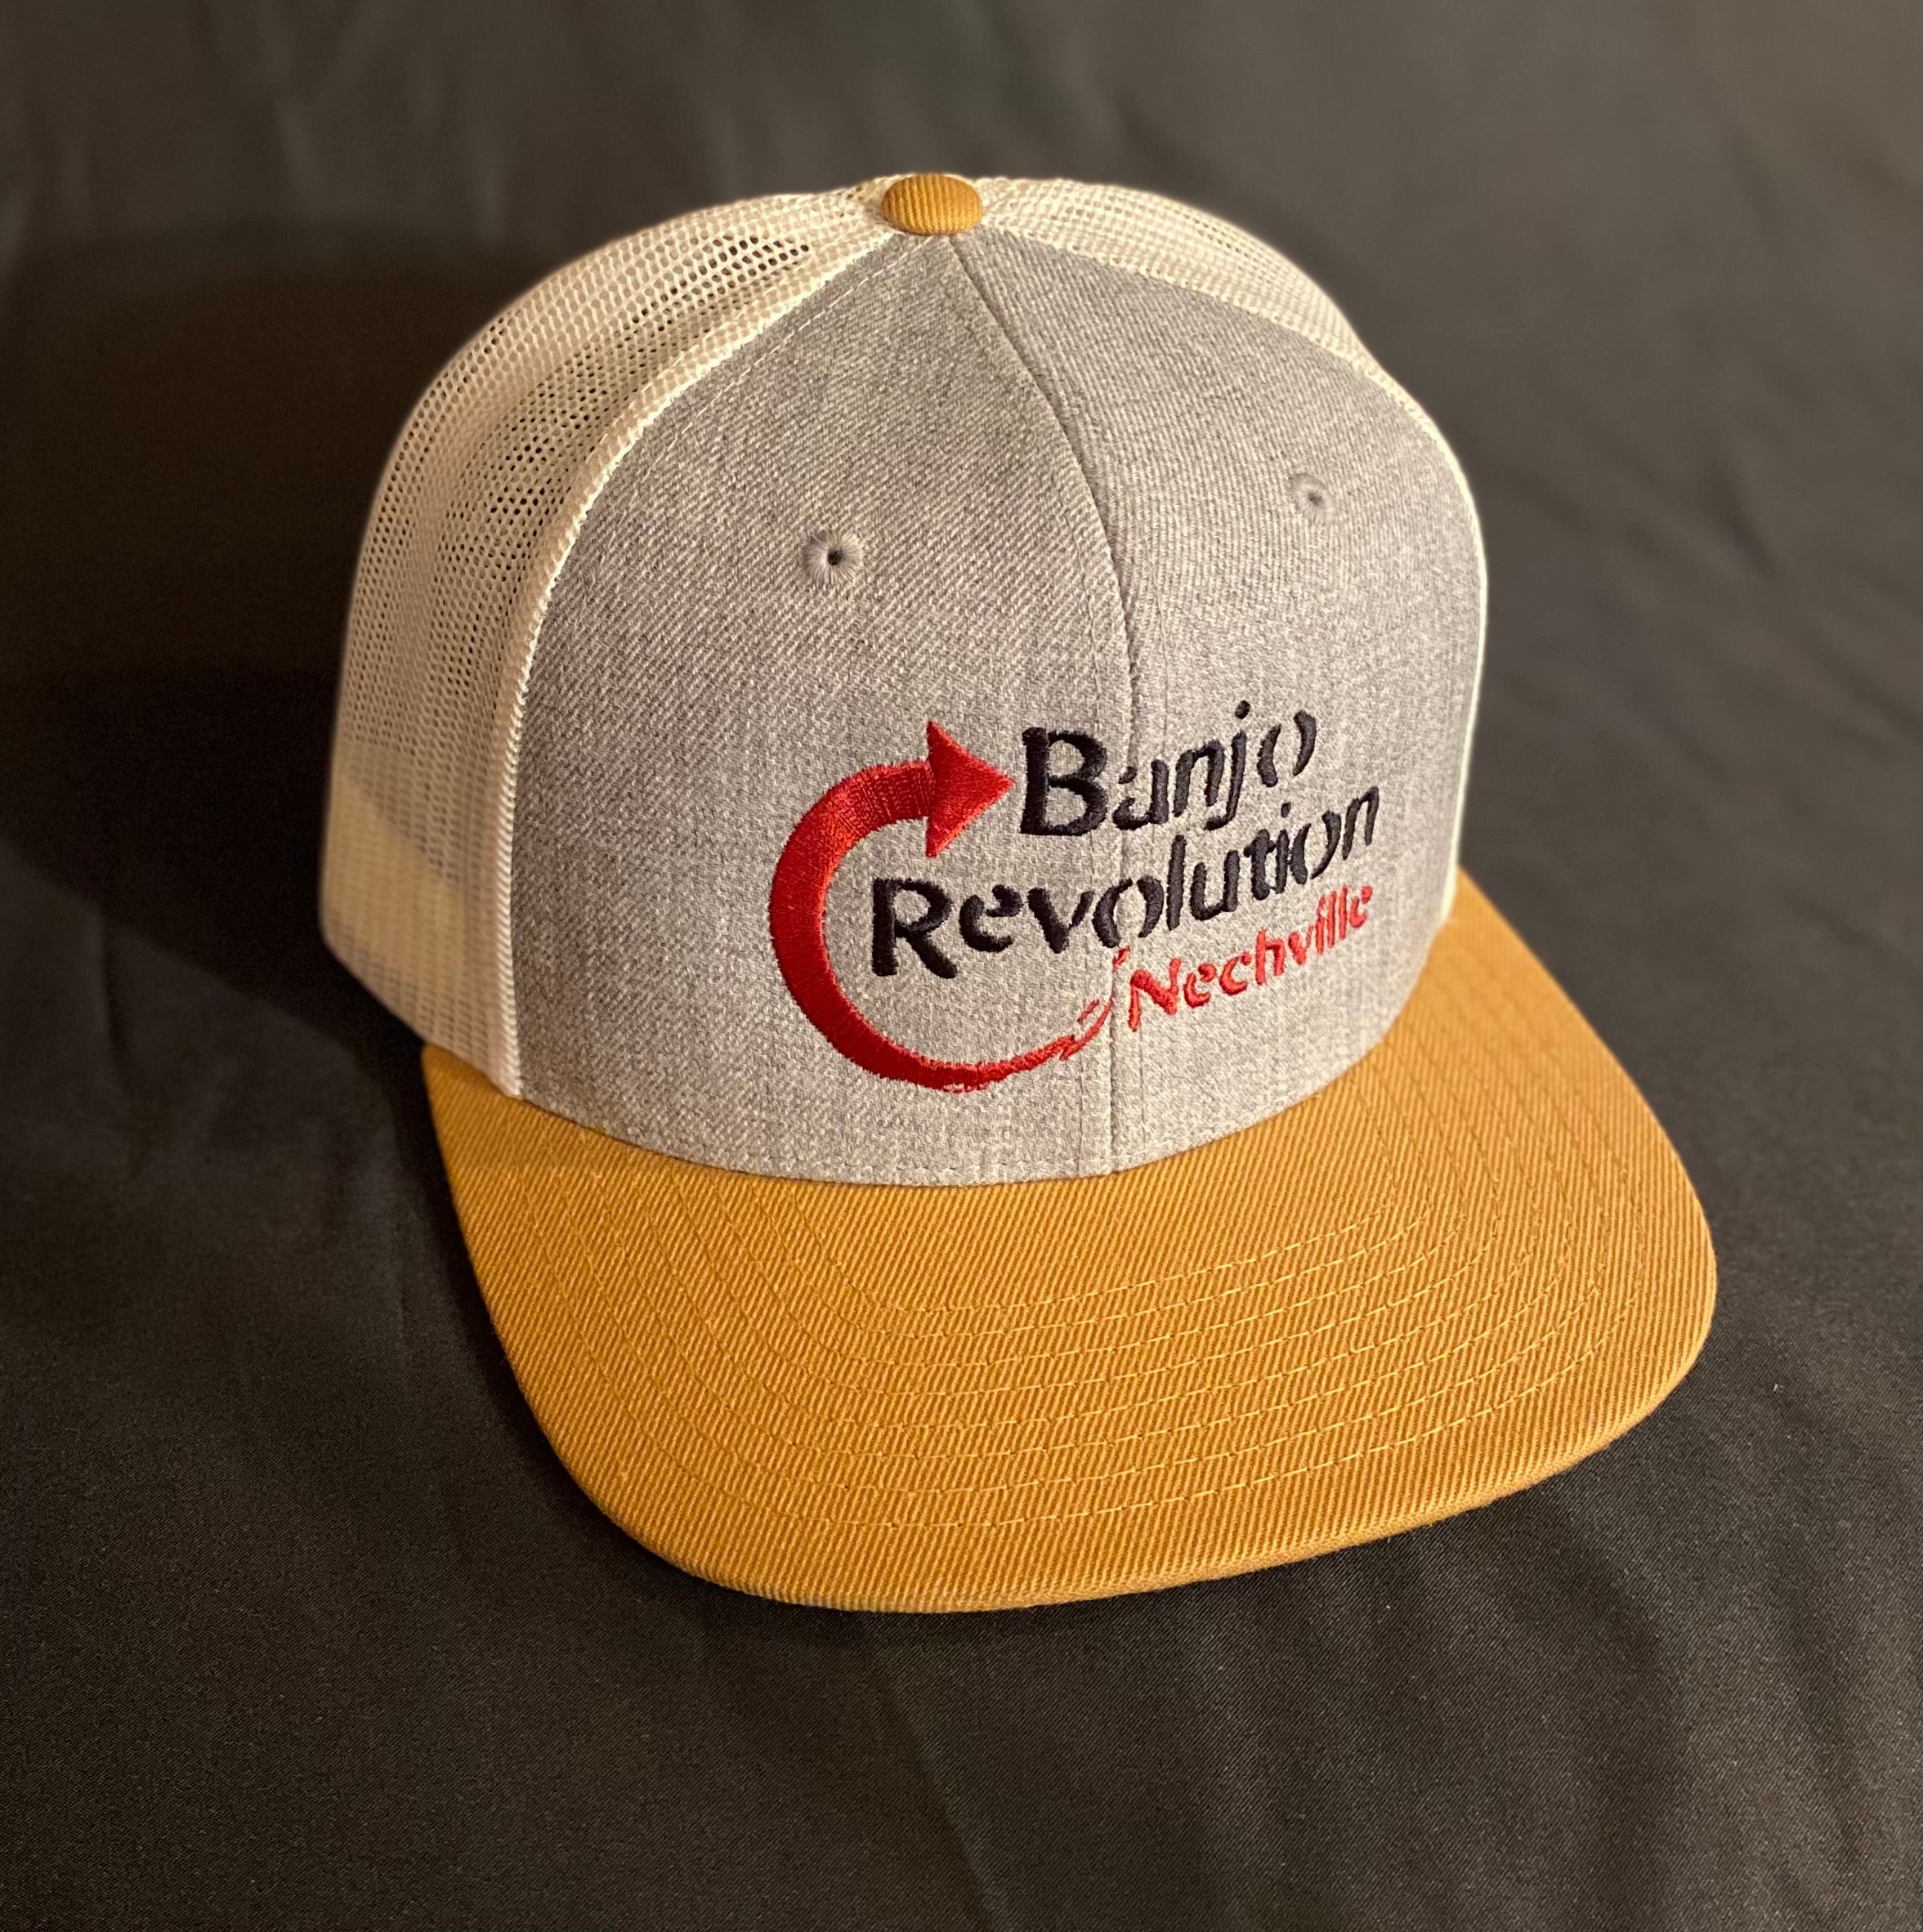 Nechville Revolution Cap